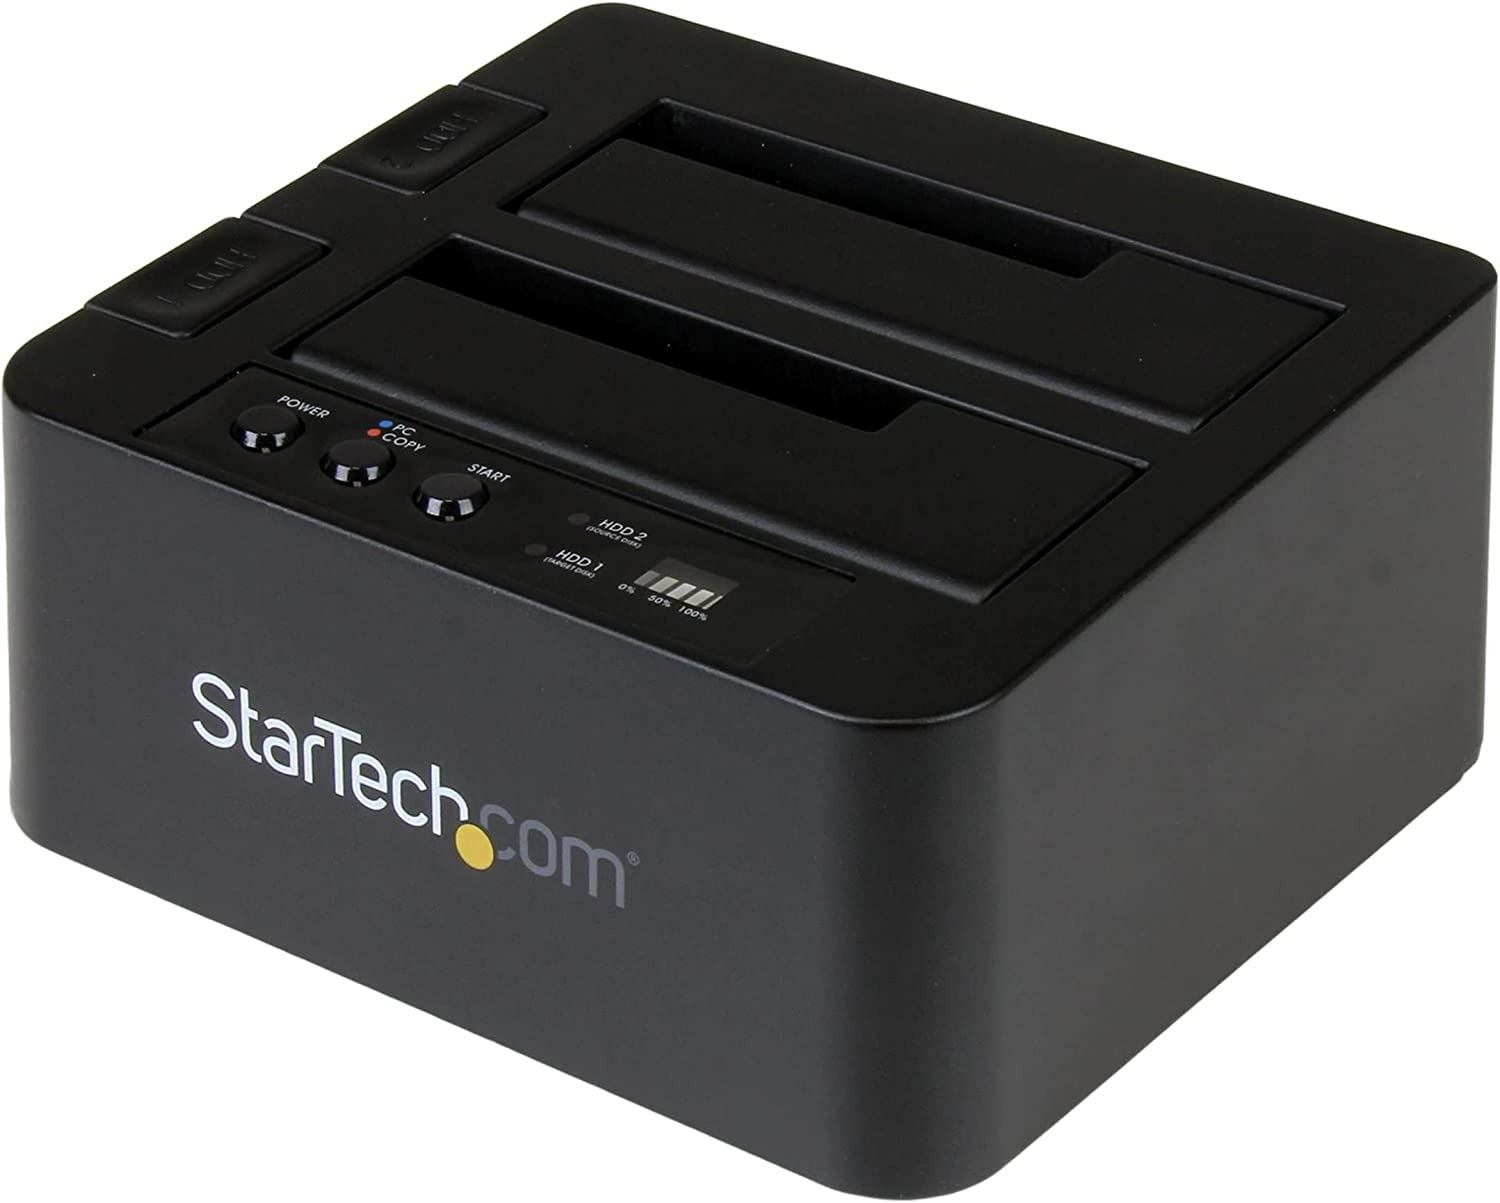 Startech.Com Standalone Hard Drive Duplicator, External Dual Bay HDD/SSD Cloner/